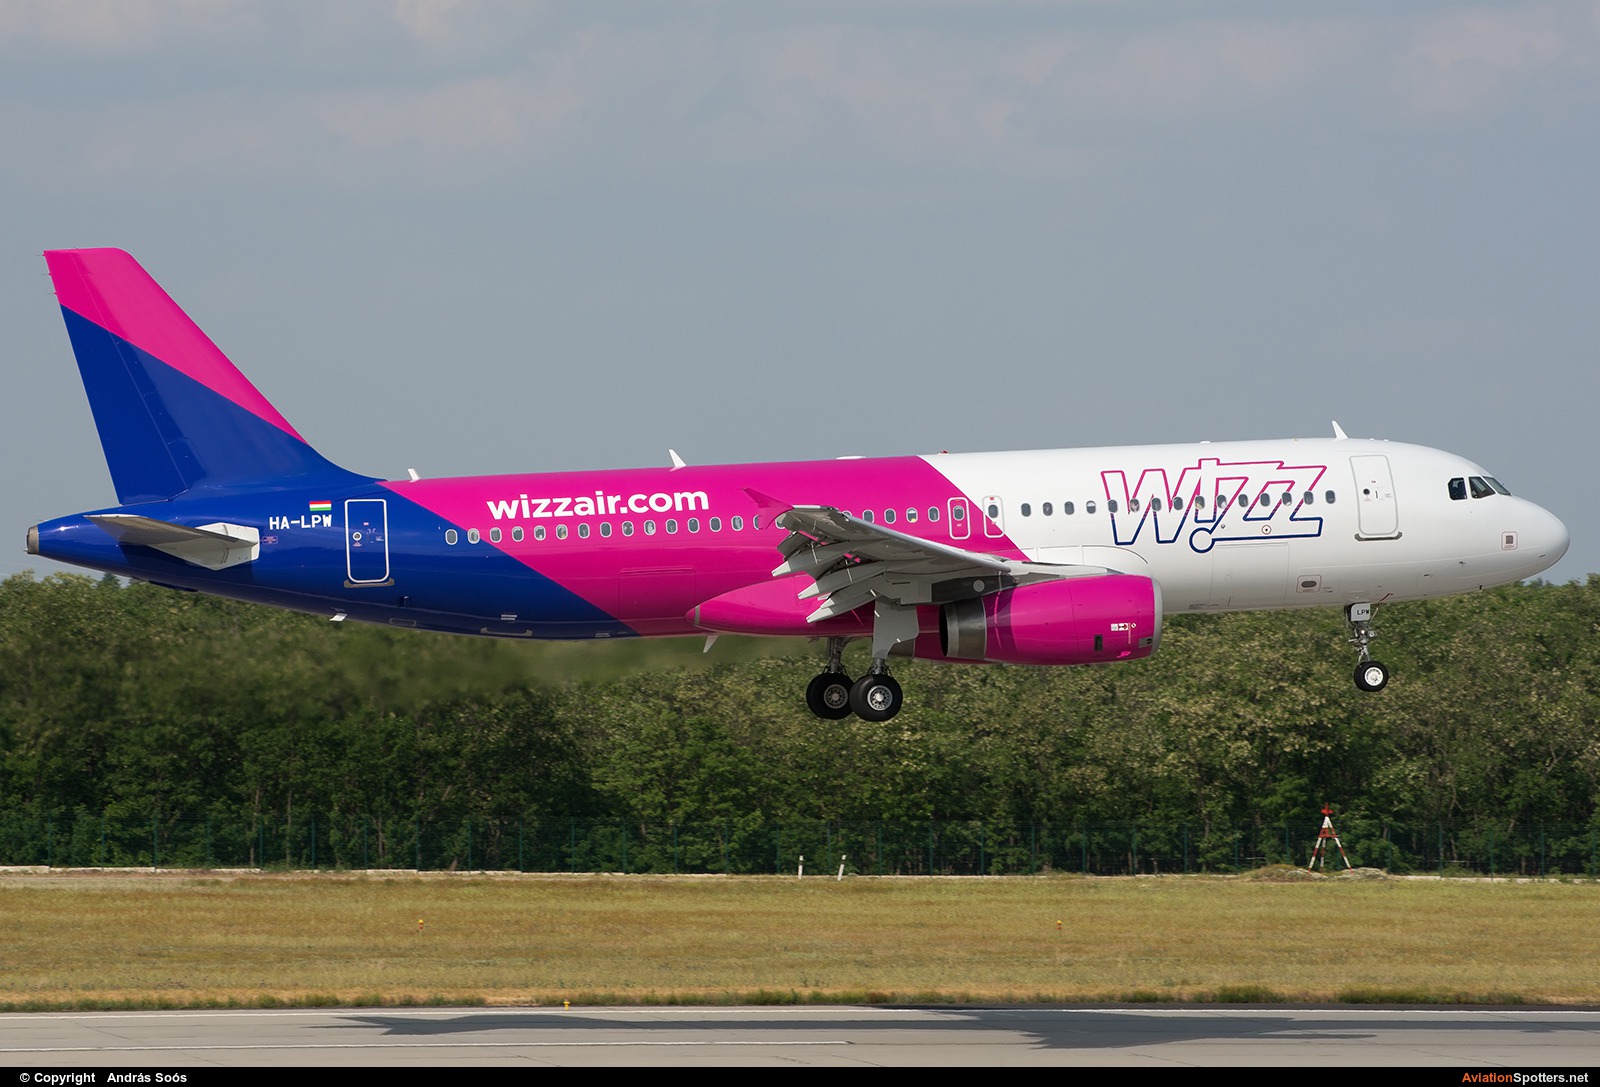 Wizz Air  -  A320  (HA-LPW) By András Soós (sas1965)